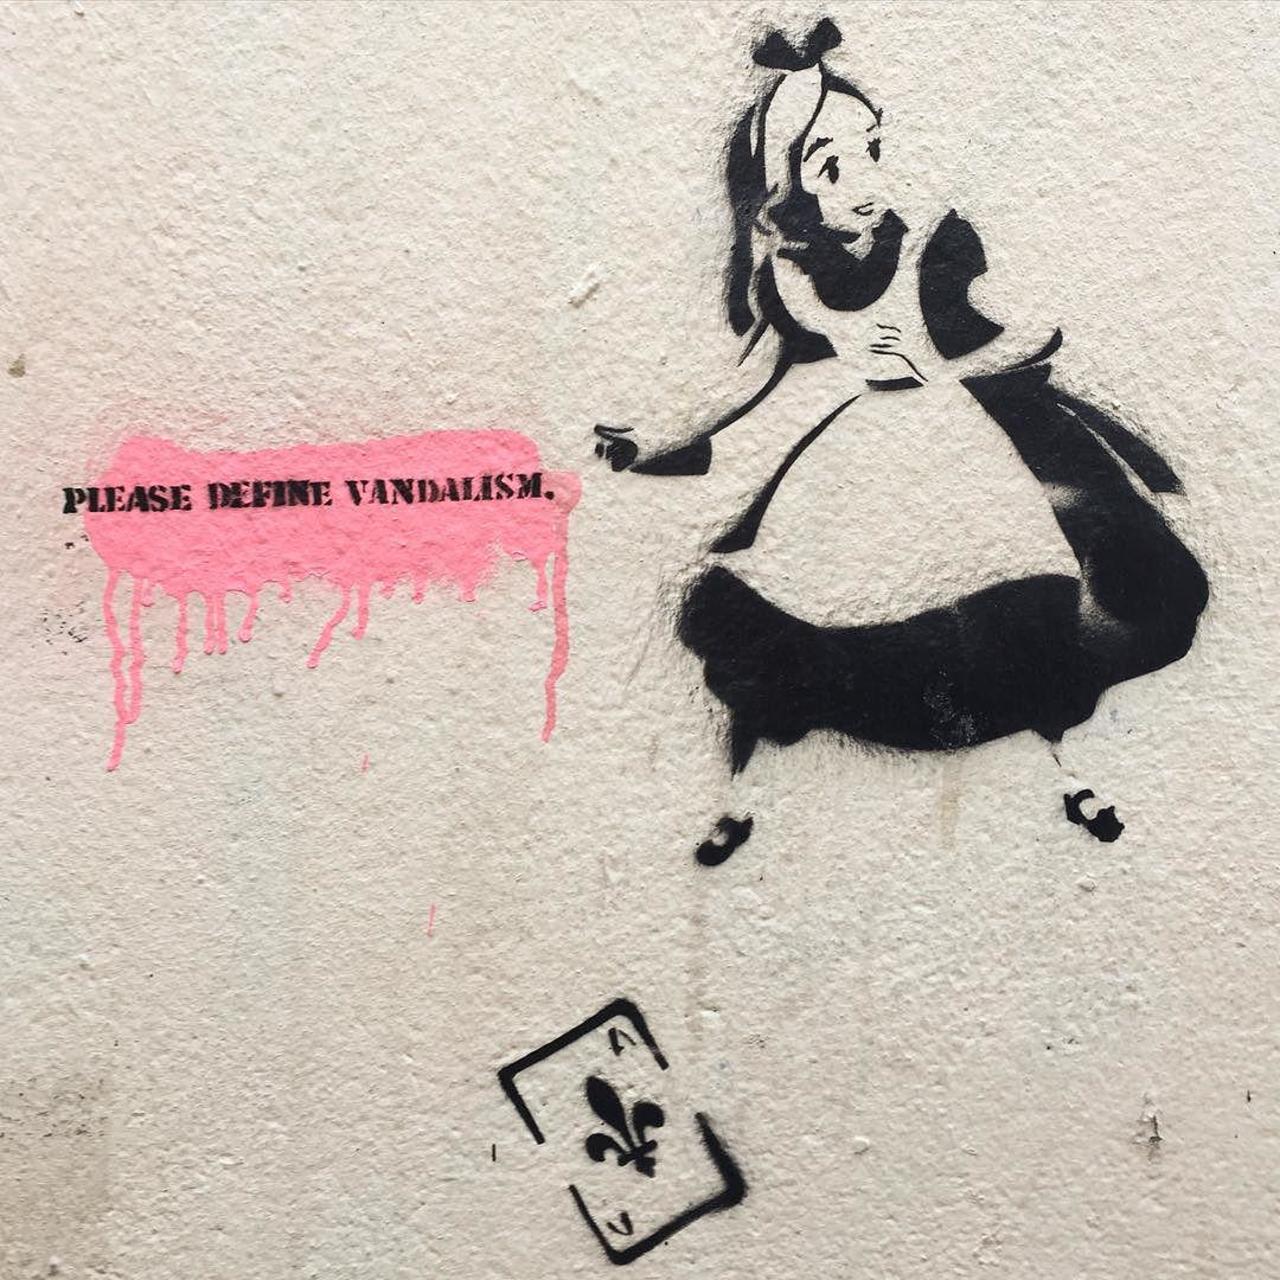 #Paris #graffiti photo by @catscoffeecreativity http://ift.tt/1GgQMHN #StreetArt http://t.co/si2SbwyLVw